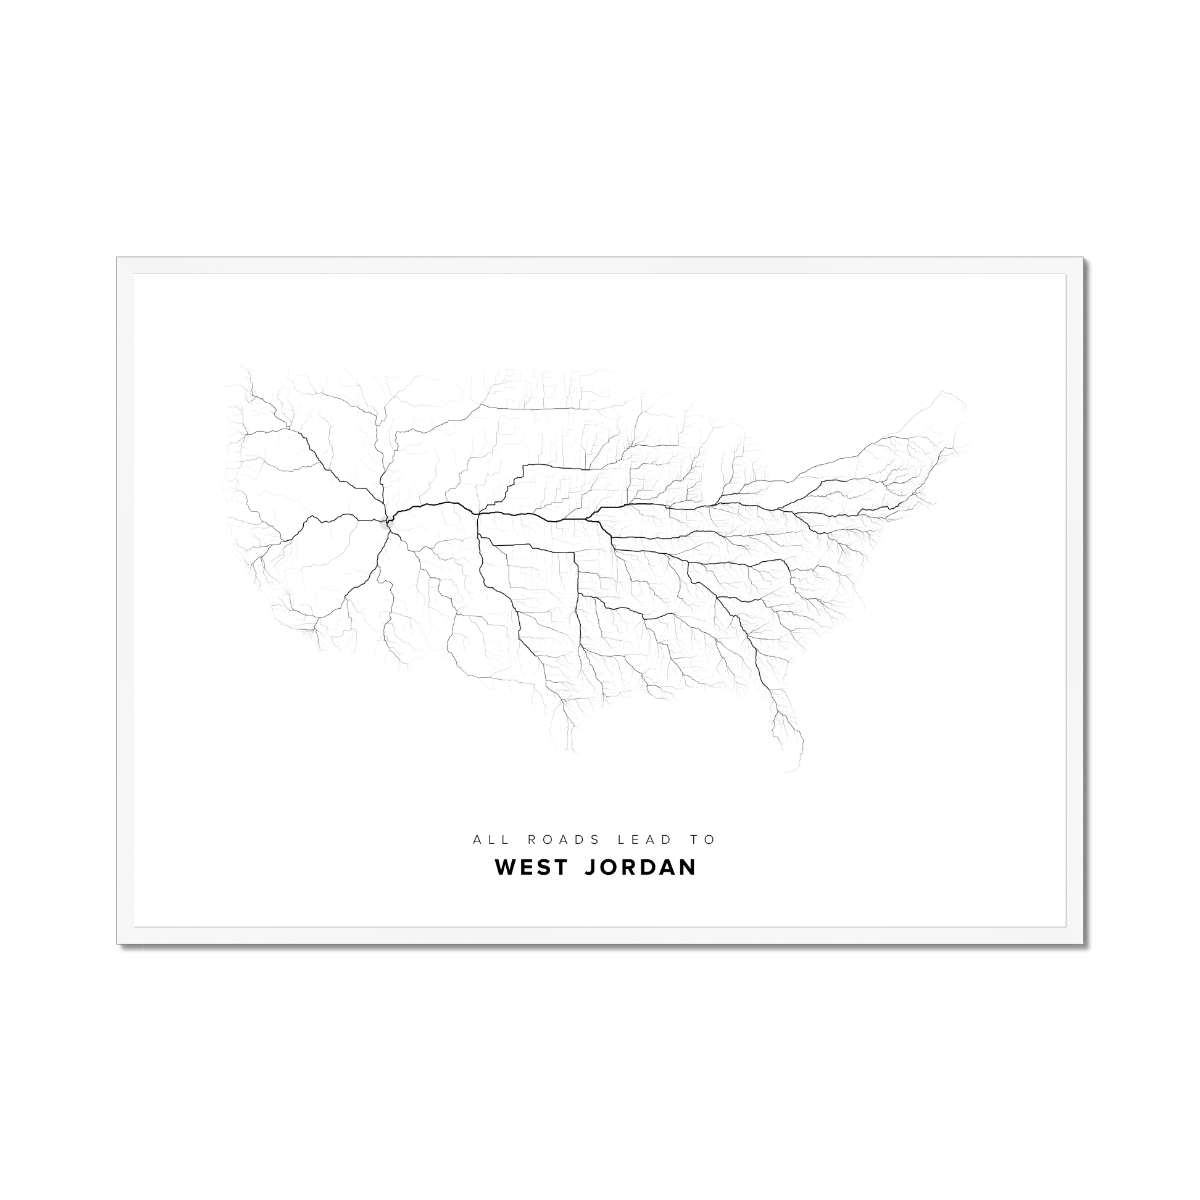 All roads lead to West Jordan (United States of America) Fine Art Map Print